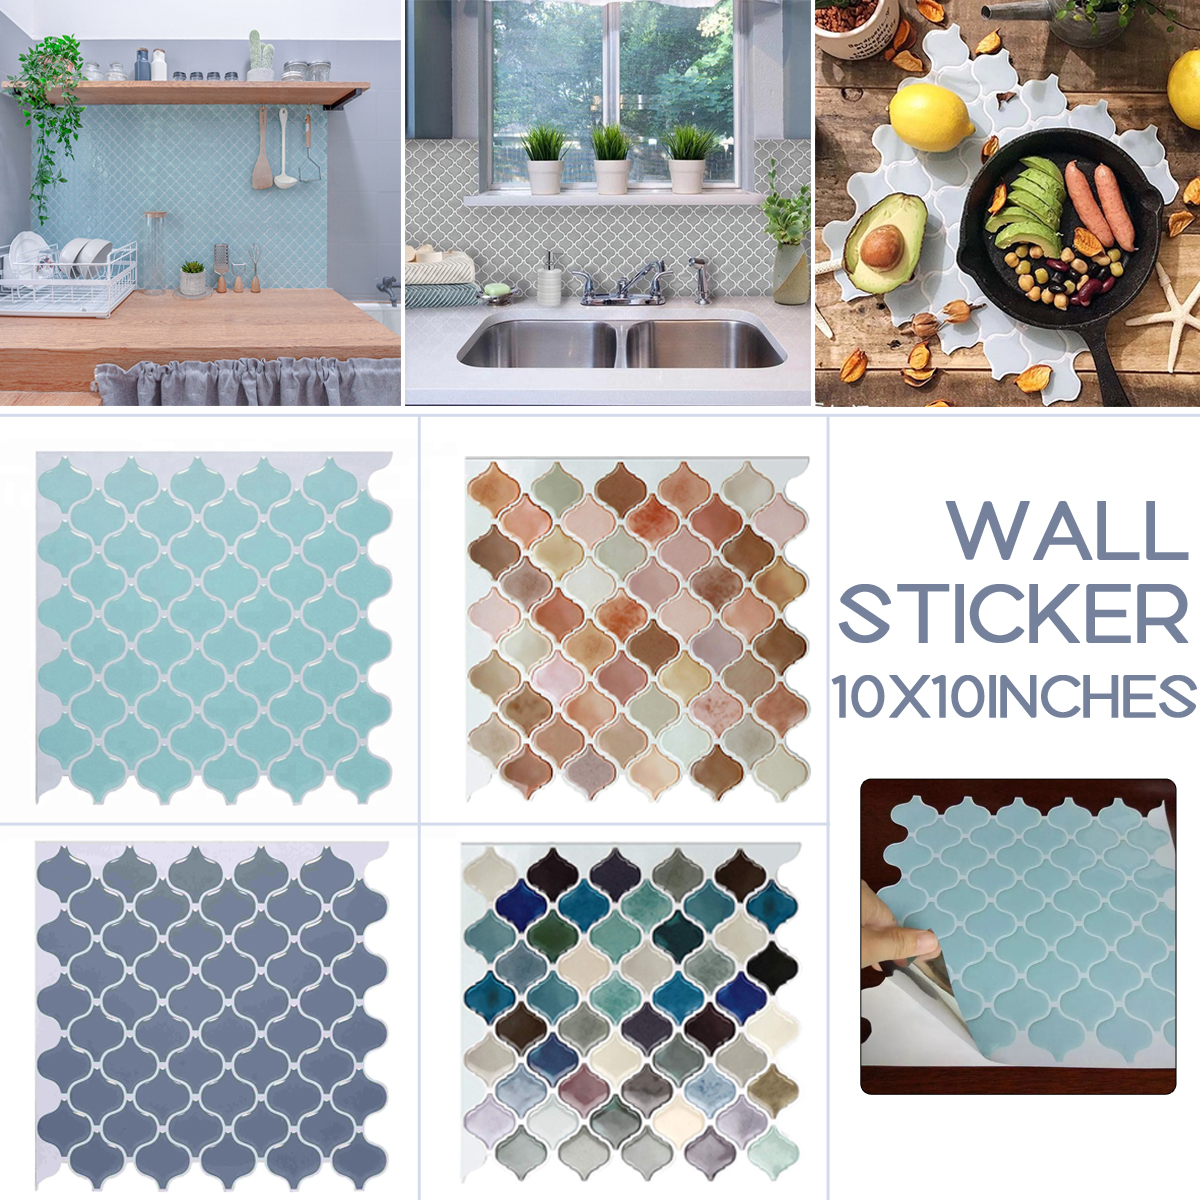 DIY-3D-Self-Adhesive-Wall-Tile-Sticker-Vinyl-Home-Kitchen-Bathroom-Decal-Decoration-1823170-1